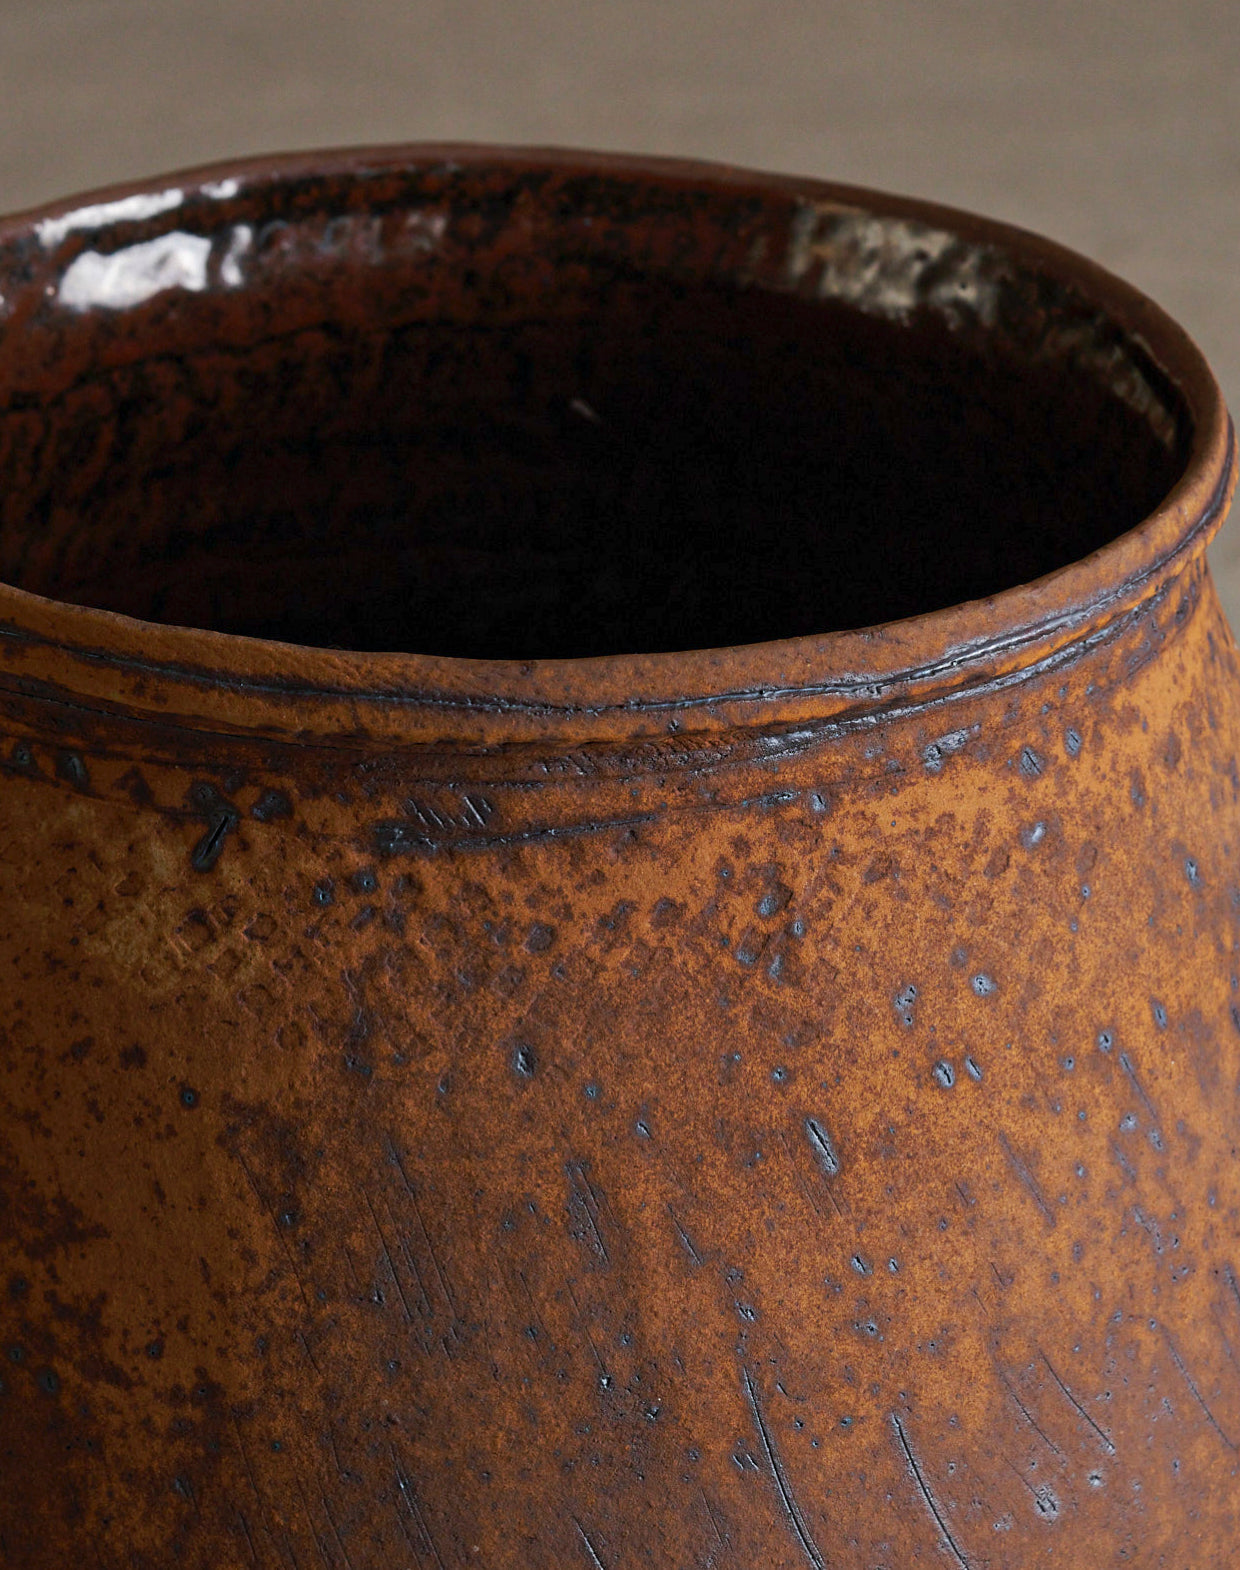 Rick Hintze Coiled Stoneware Vessel, "Untitled" No. 15